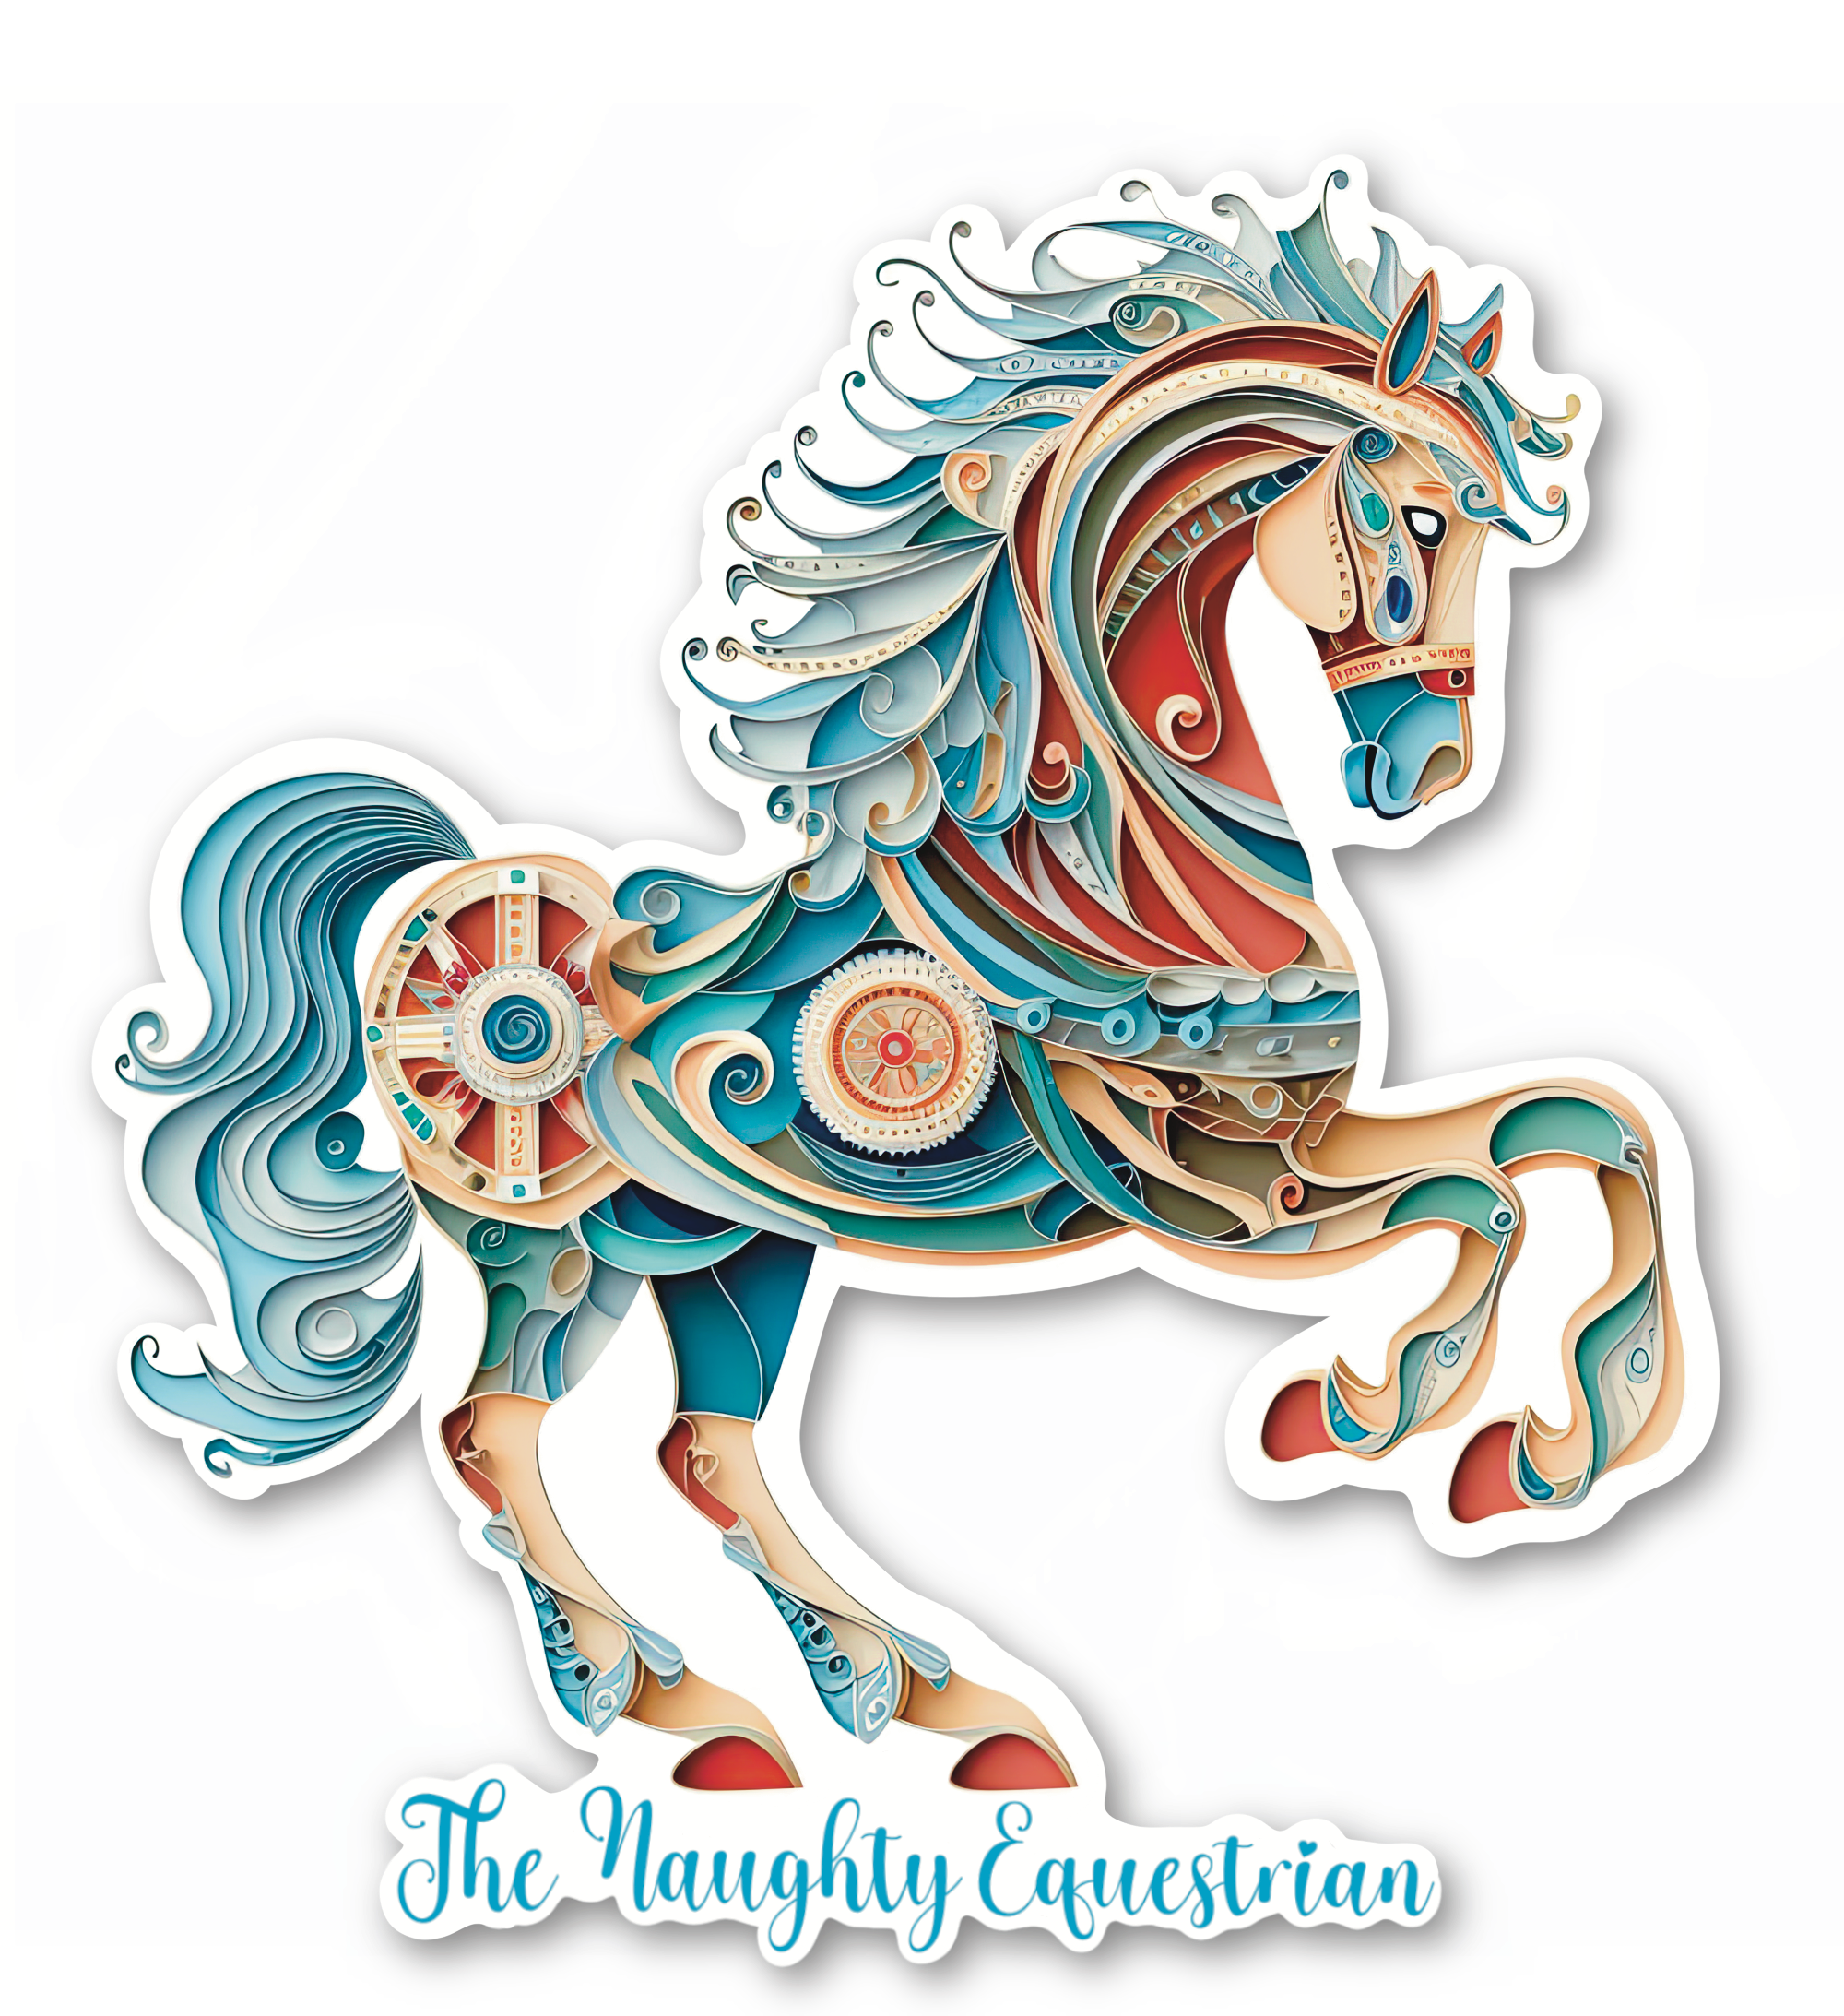 Carousel Horse Western Sticker, Decal